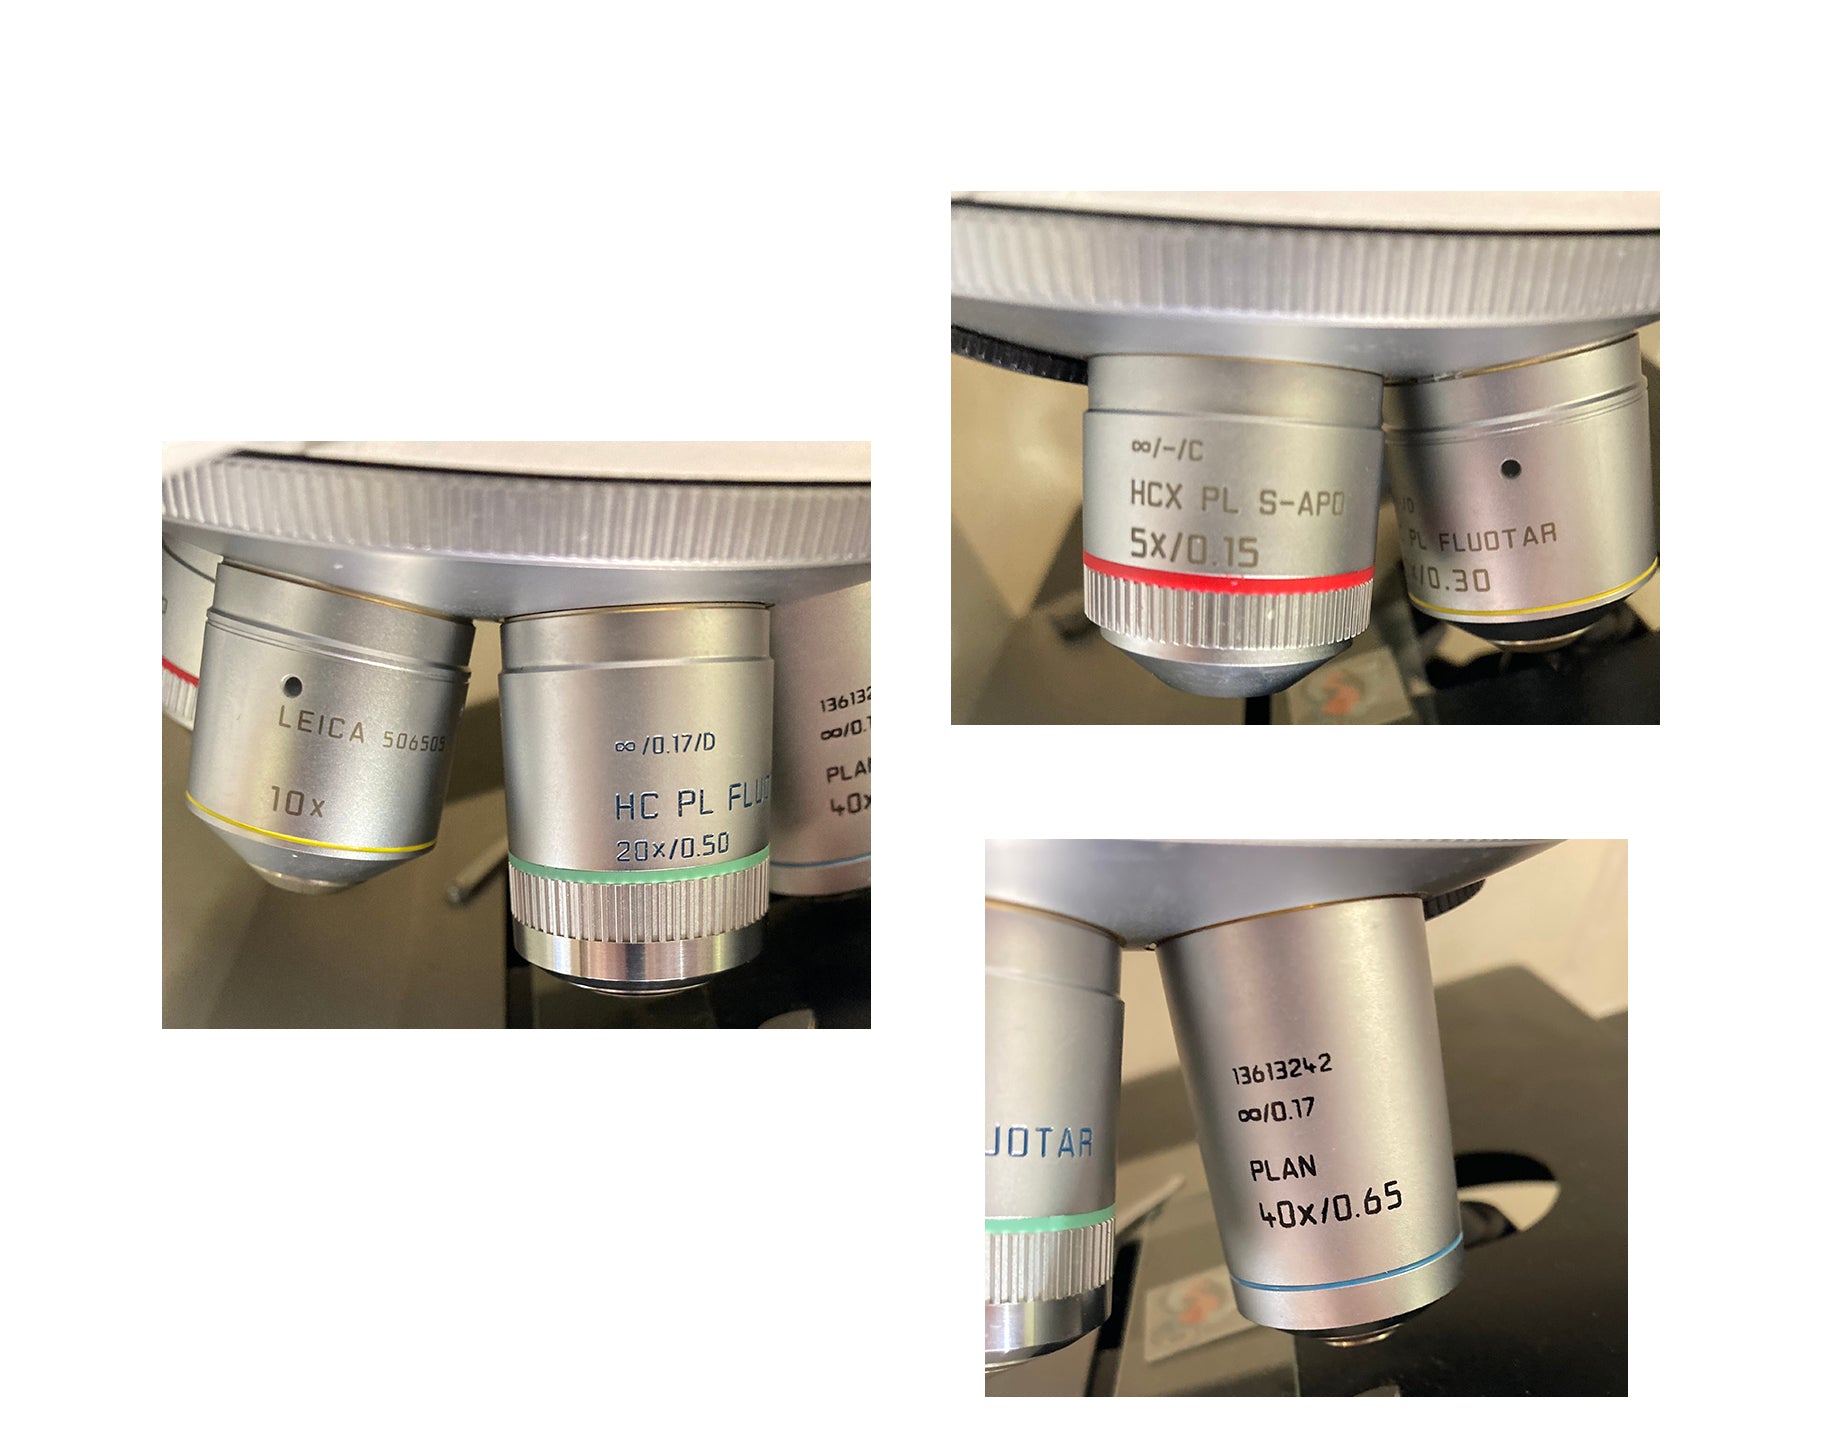 Leica DMRB Microscope - Biological (USED)